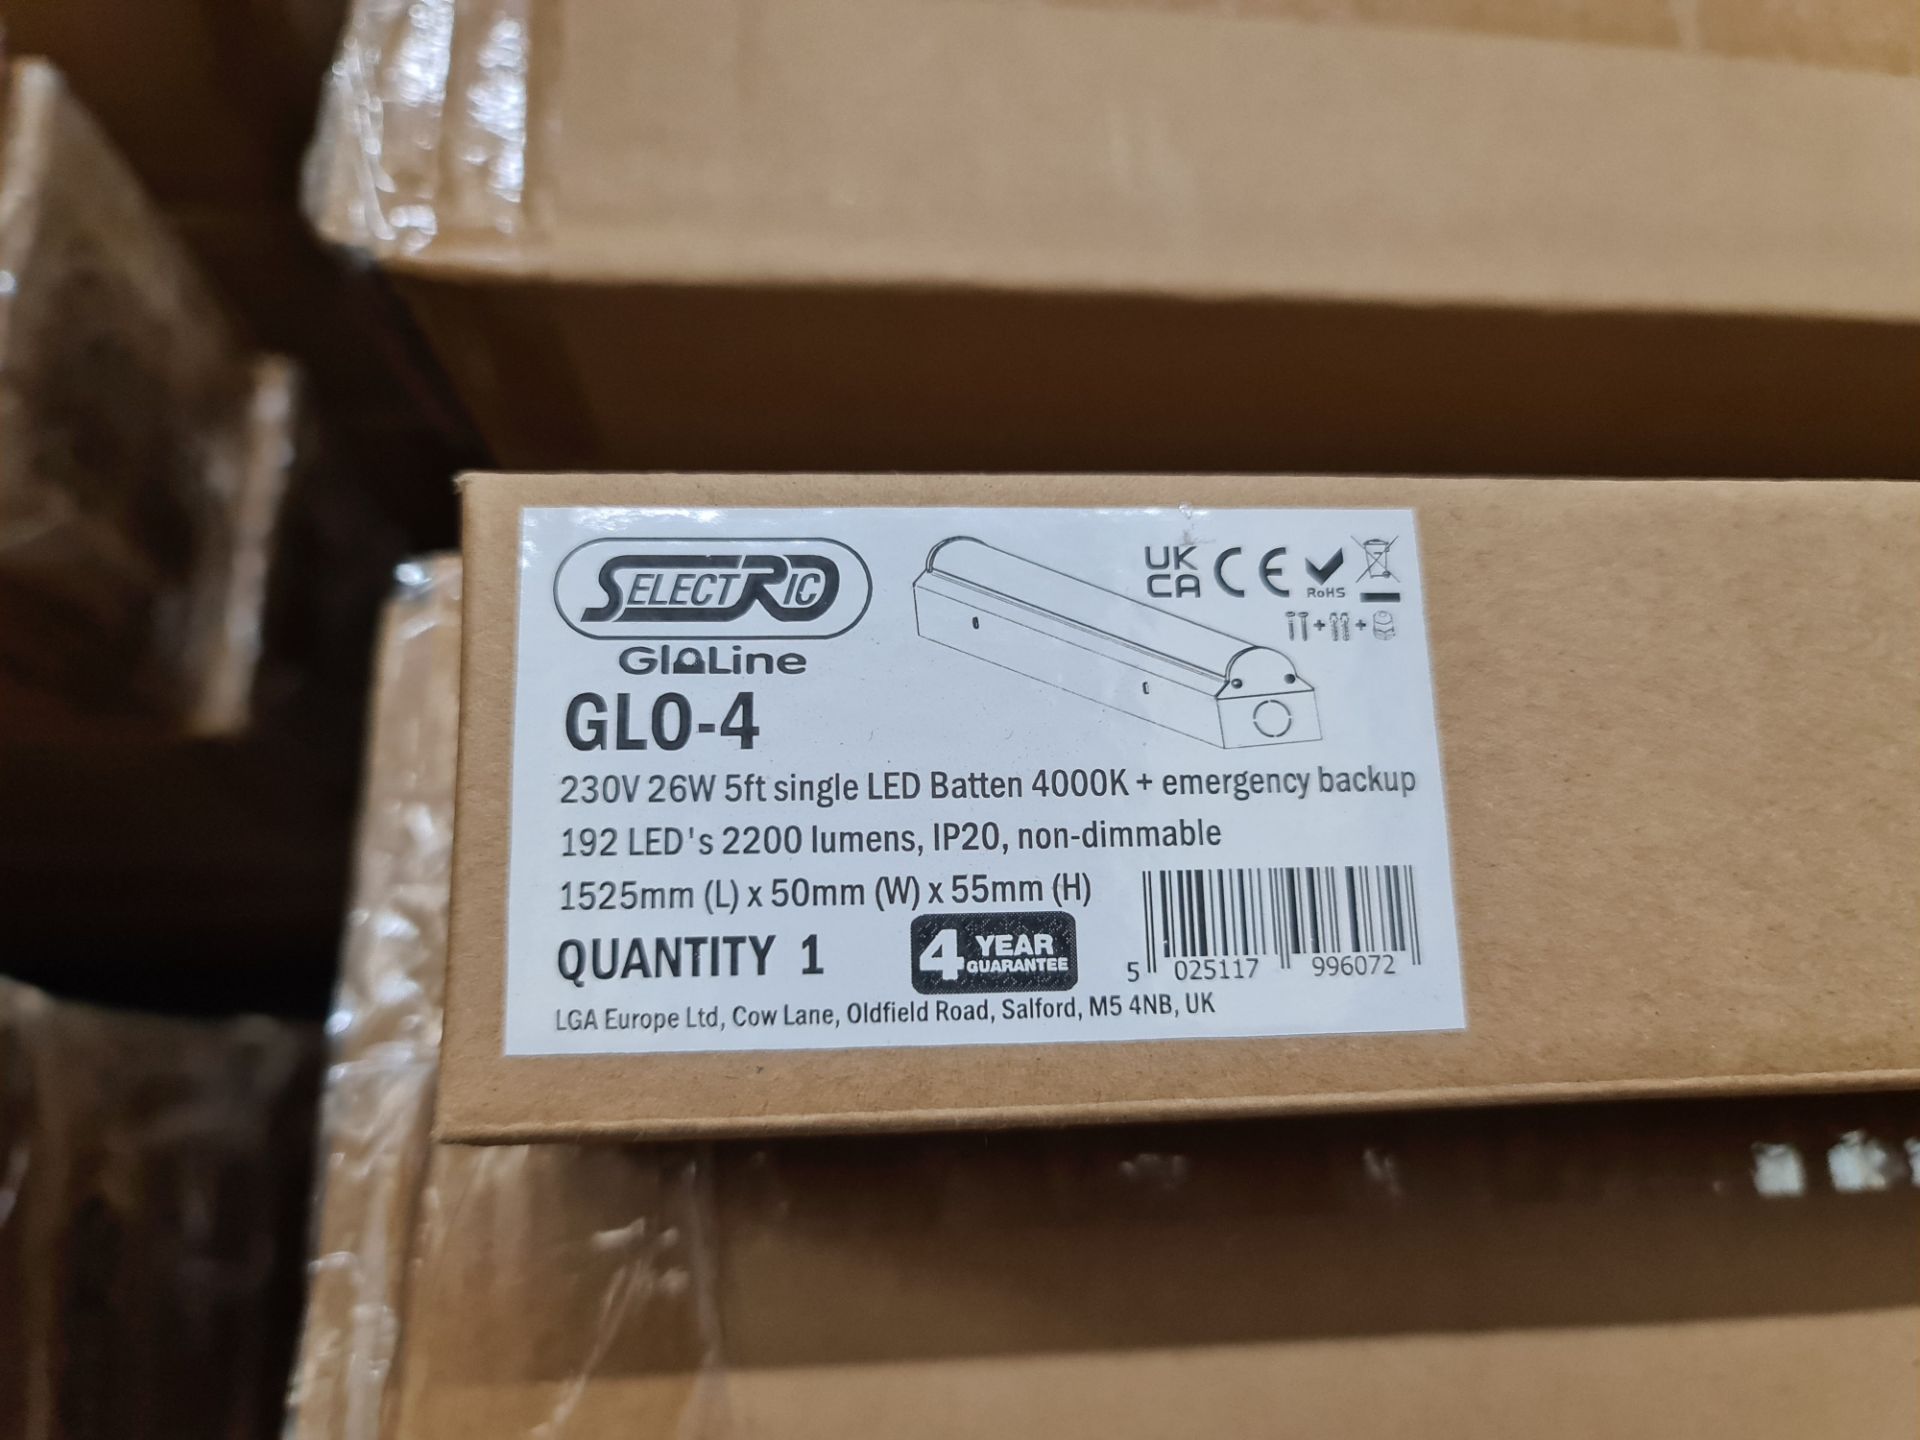 20 off Selectric Gloline GLO-4 230V 26w 5ft single LED batten (with emergency backup) 4000k lights.